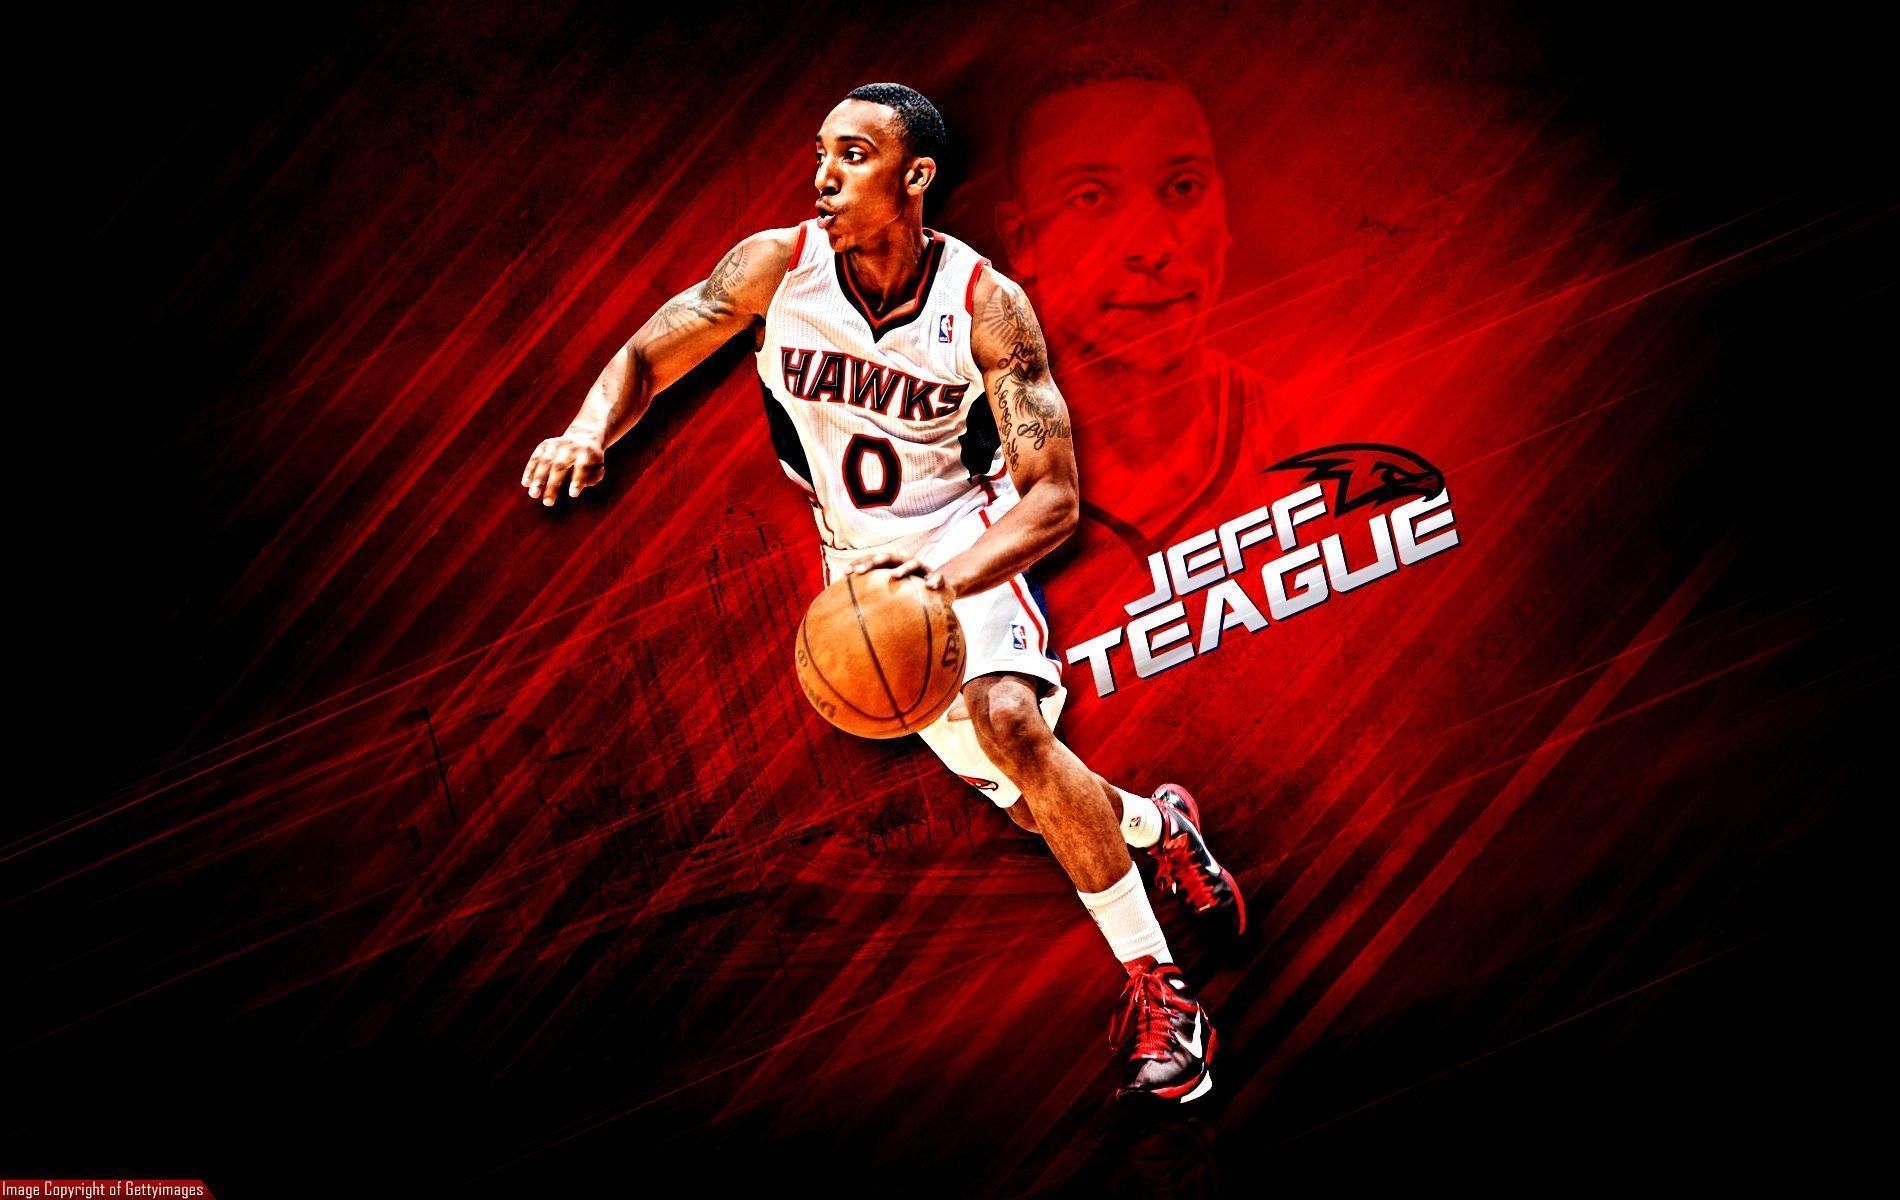 Jeff Teague 2015 Atlanta Hawks NBA Wallpaper free desktop